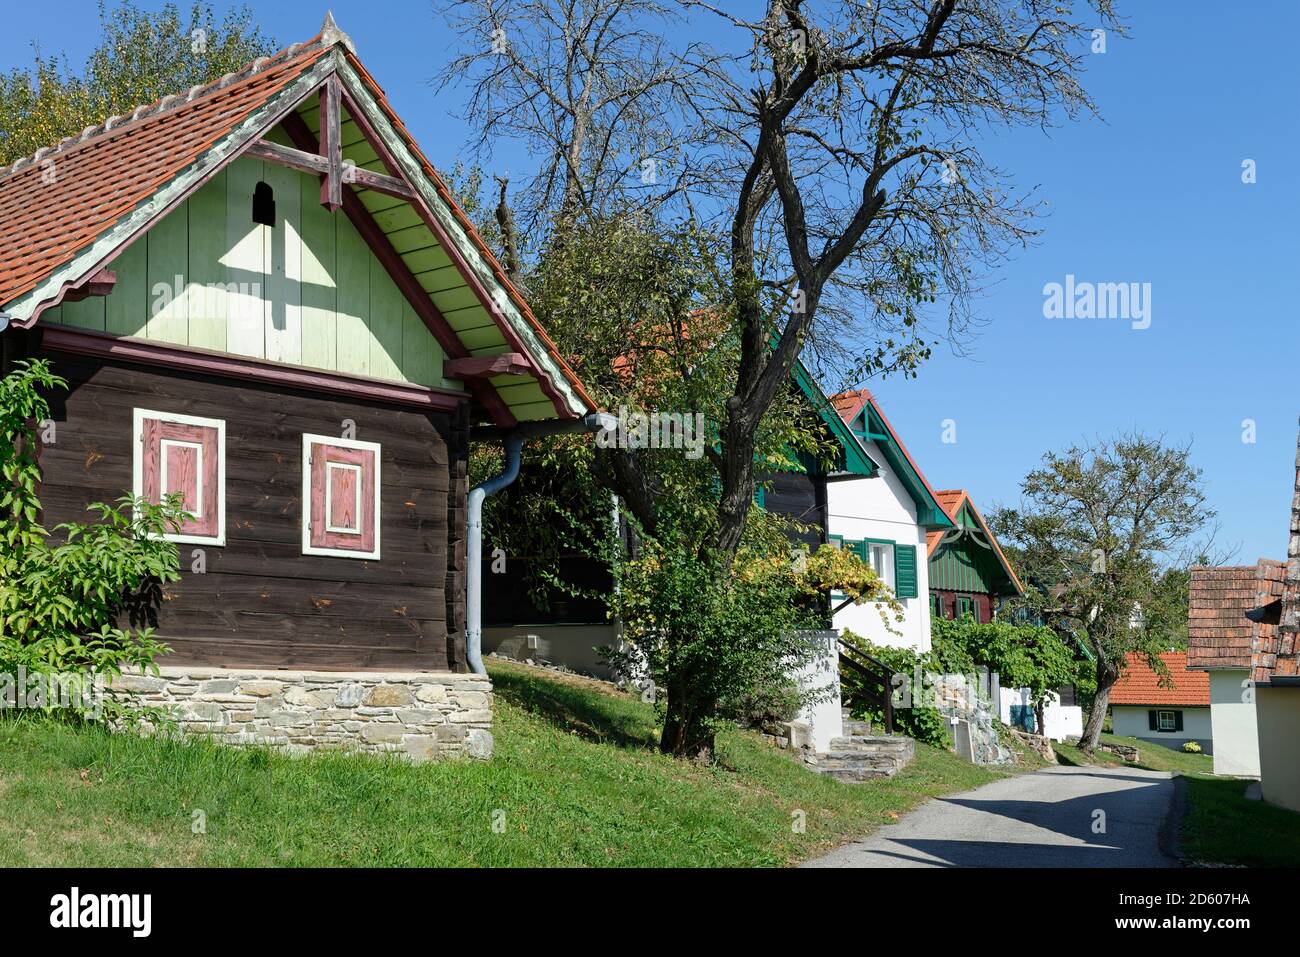 Austria, Burgenland, Kohfidisch, Csaterberg, village with rustic houses Stock Photo